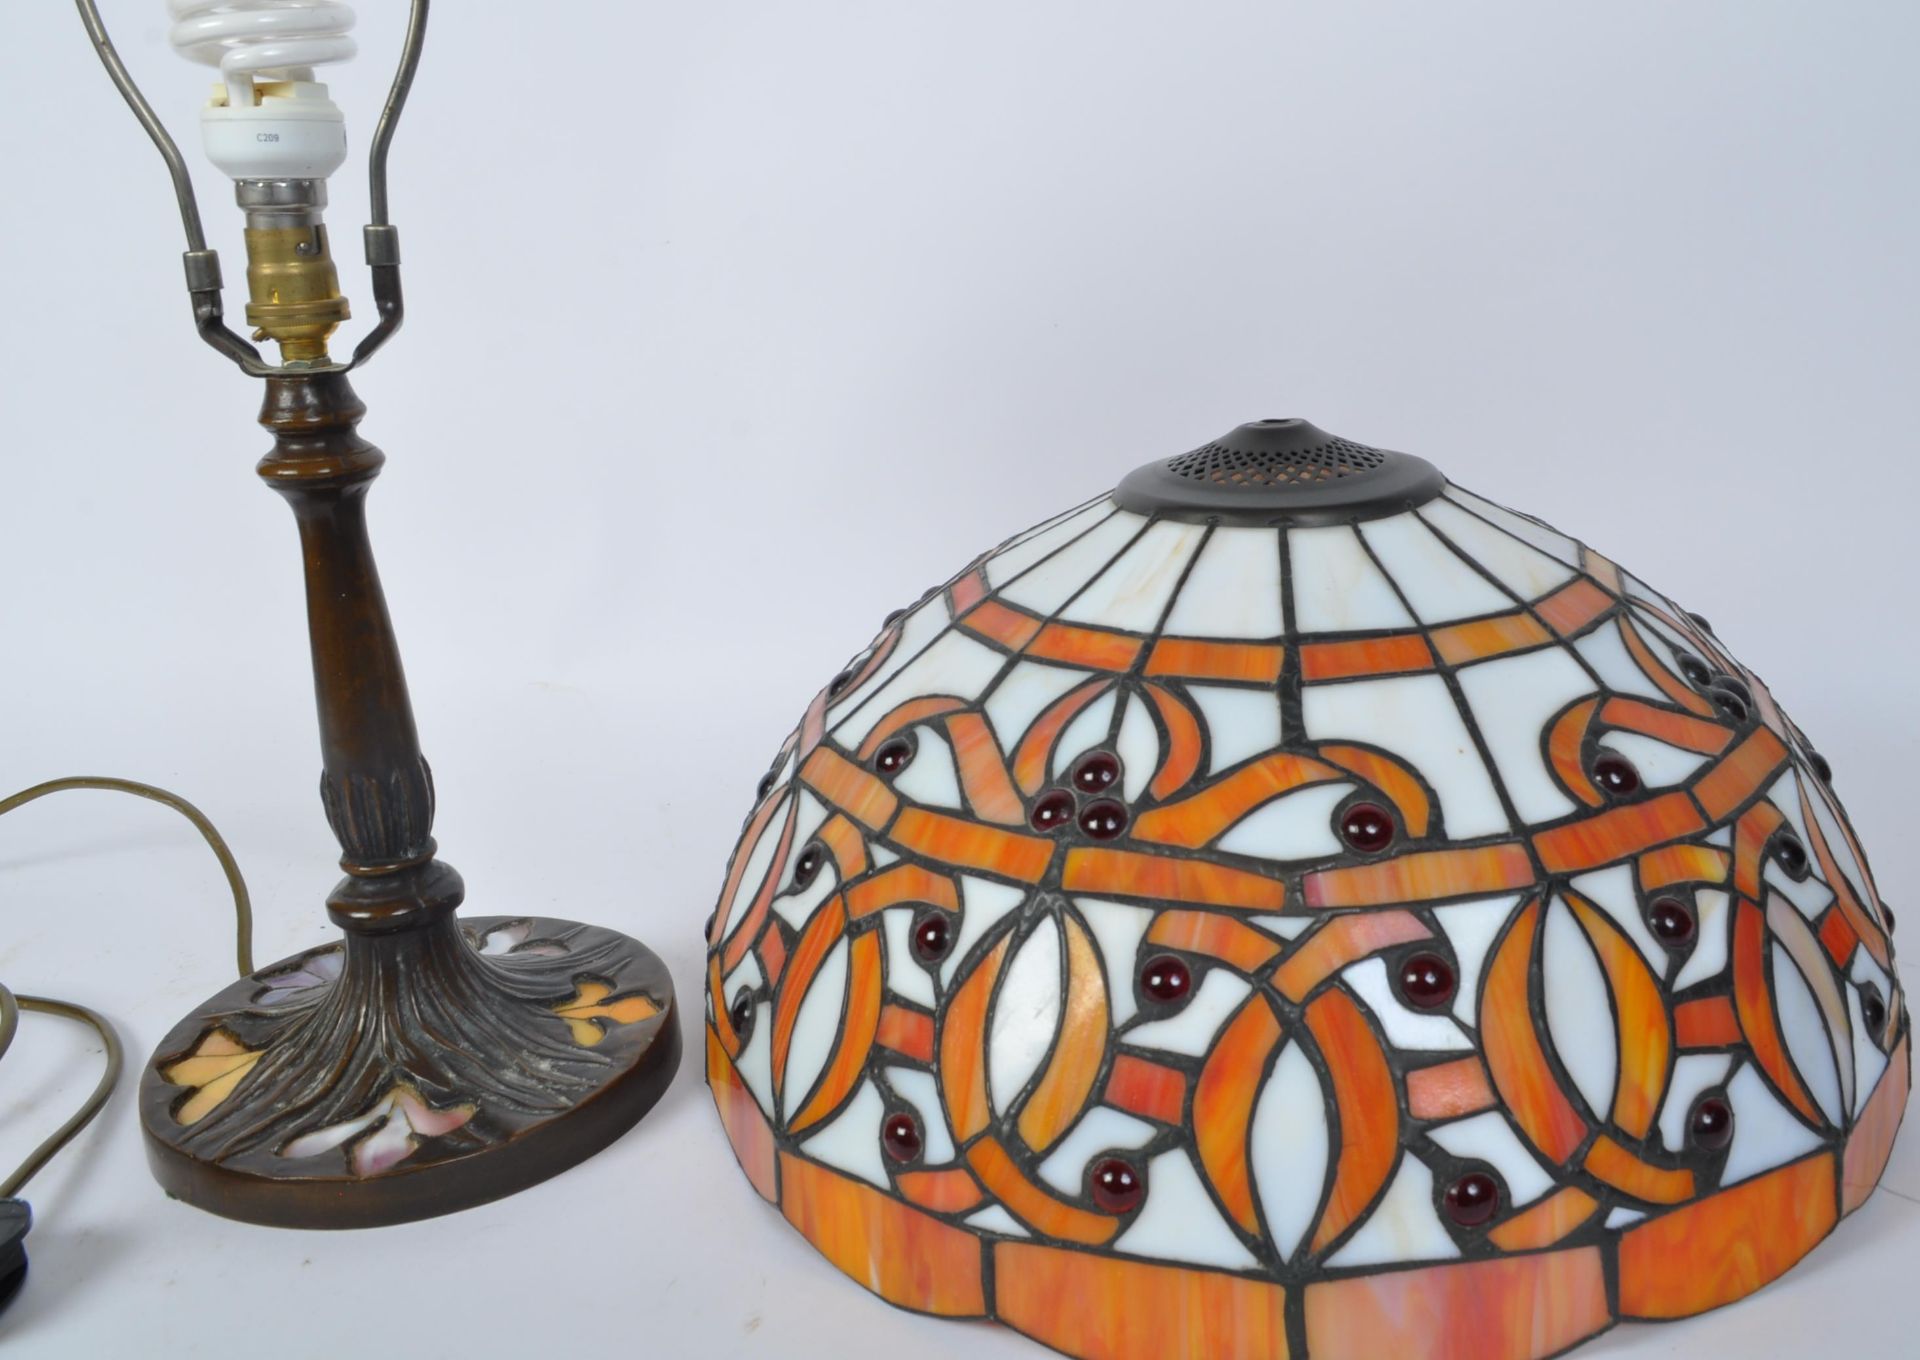 LARGE TIFFANY ART NOUVEAU STYLE TABLE LAMP - Image 6 of 7